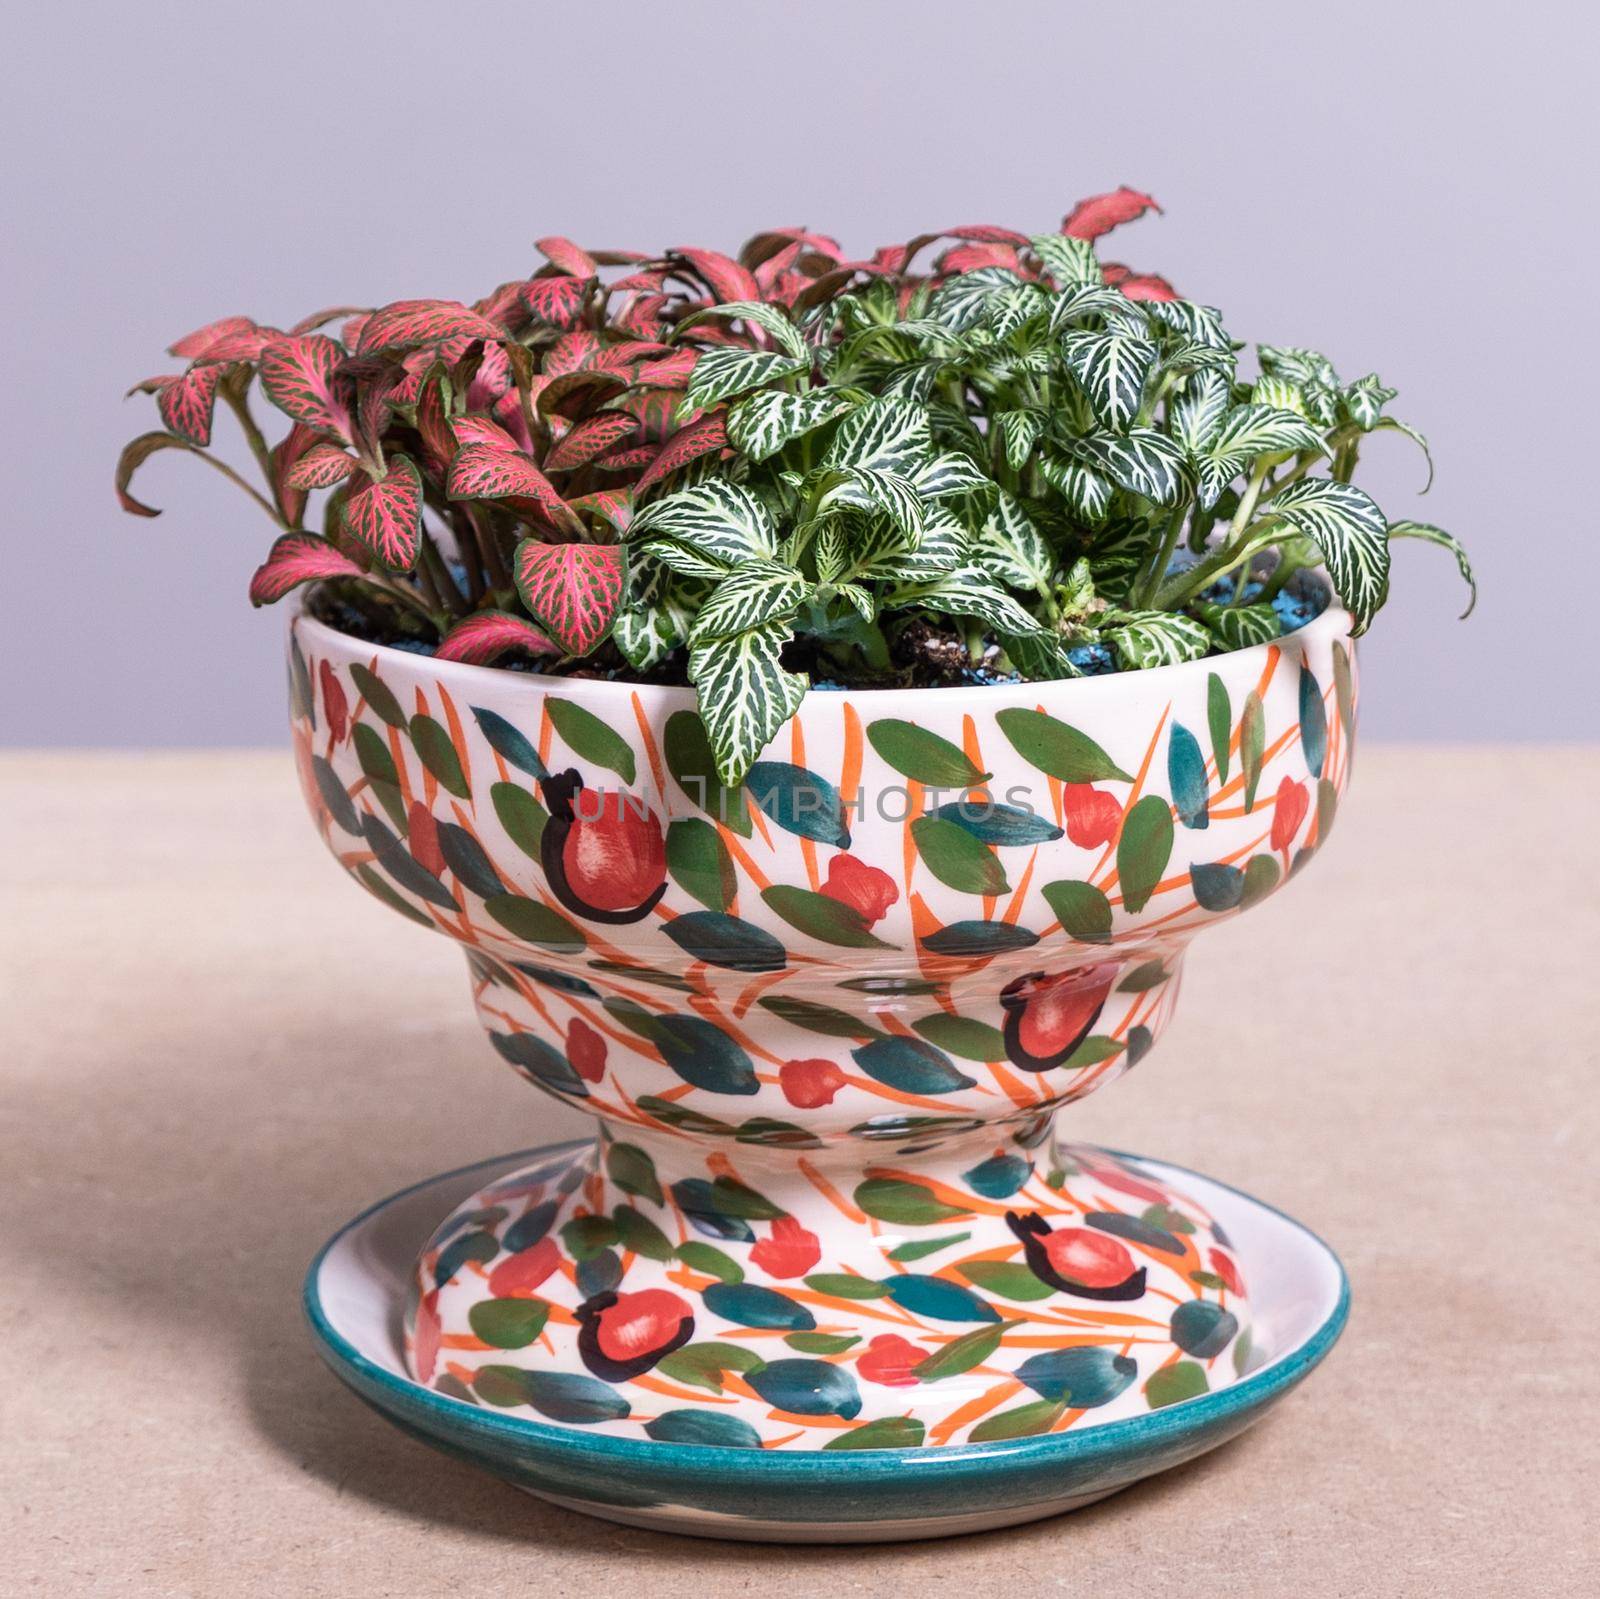 Painted-leaf begonia in the decorative ceramic pot